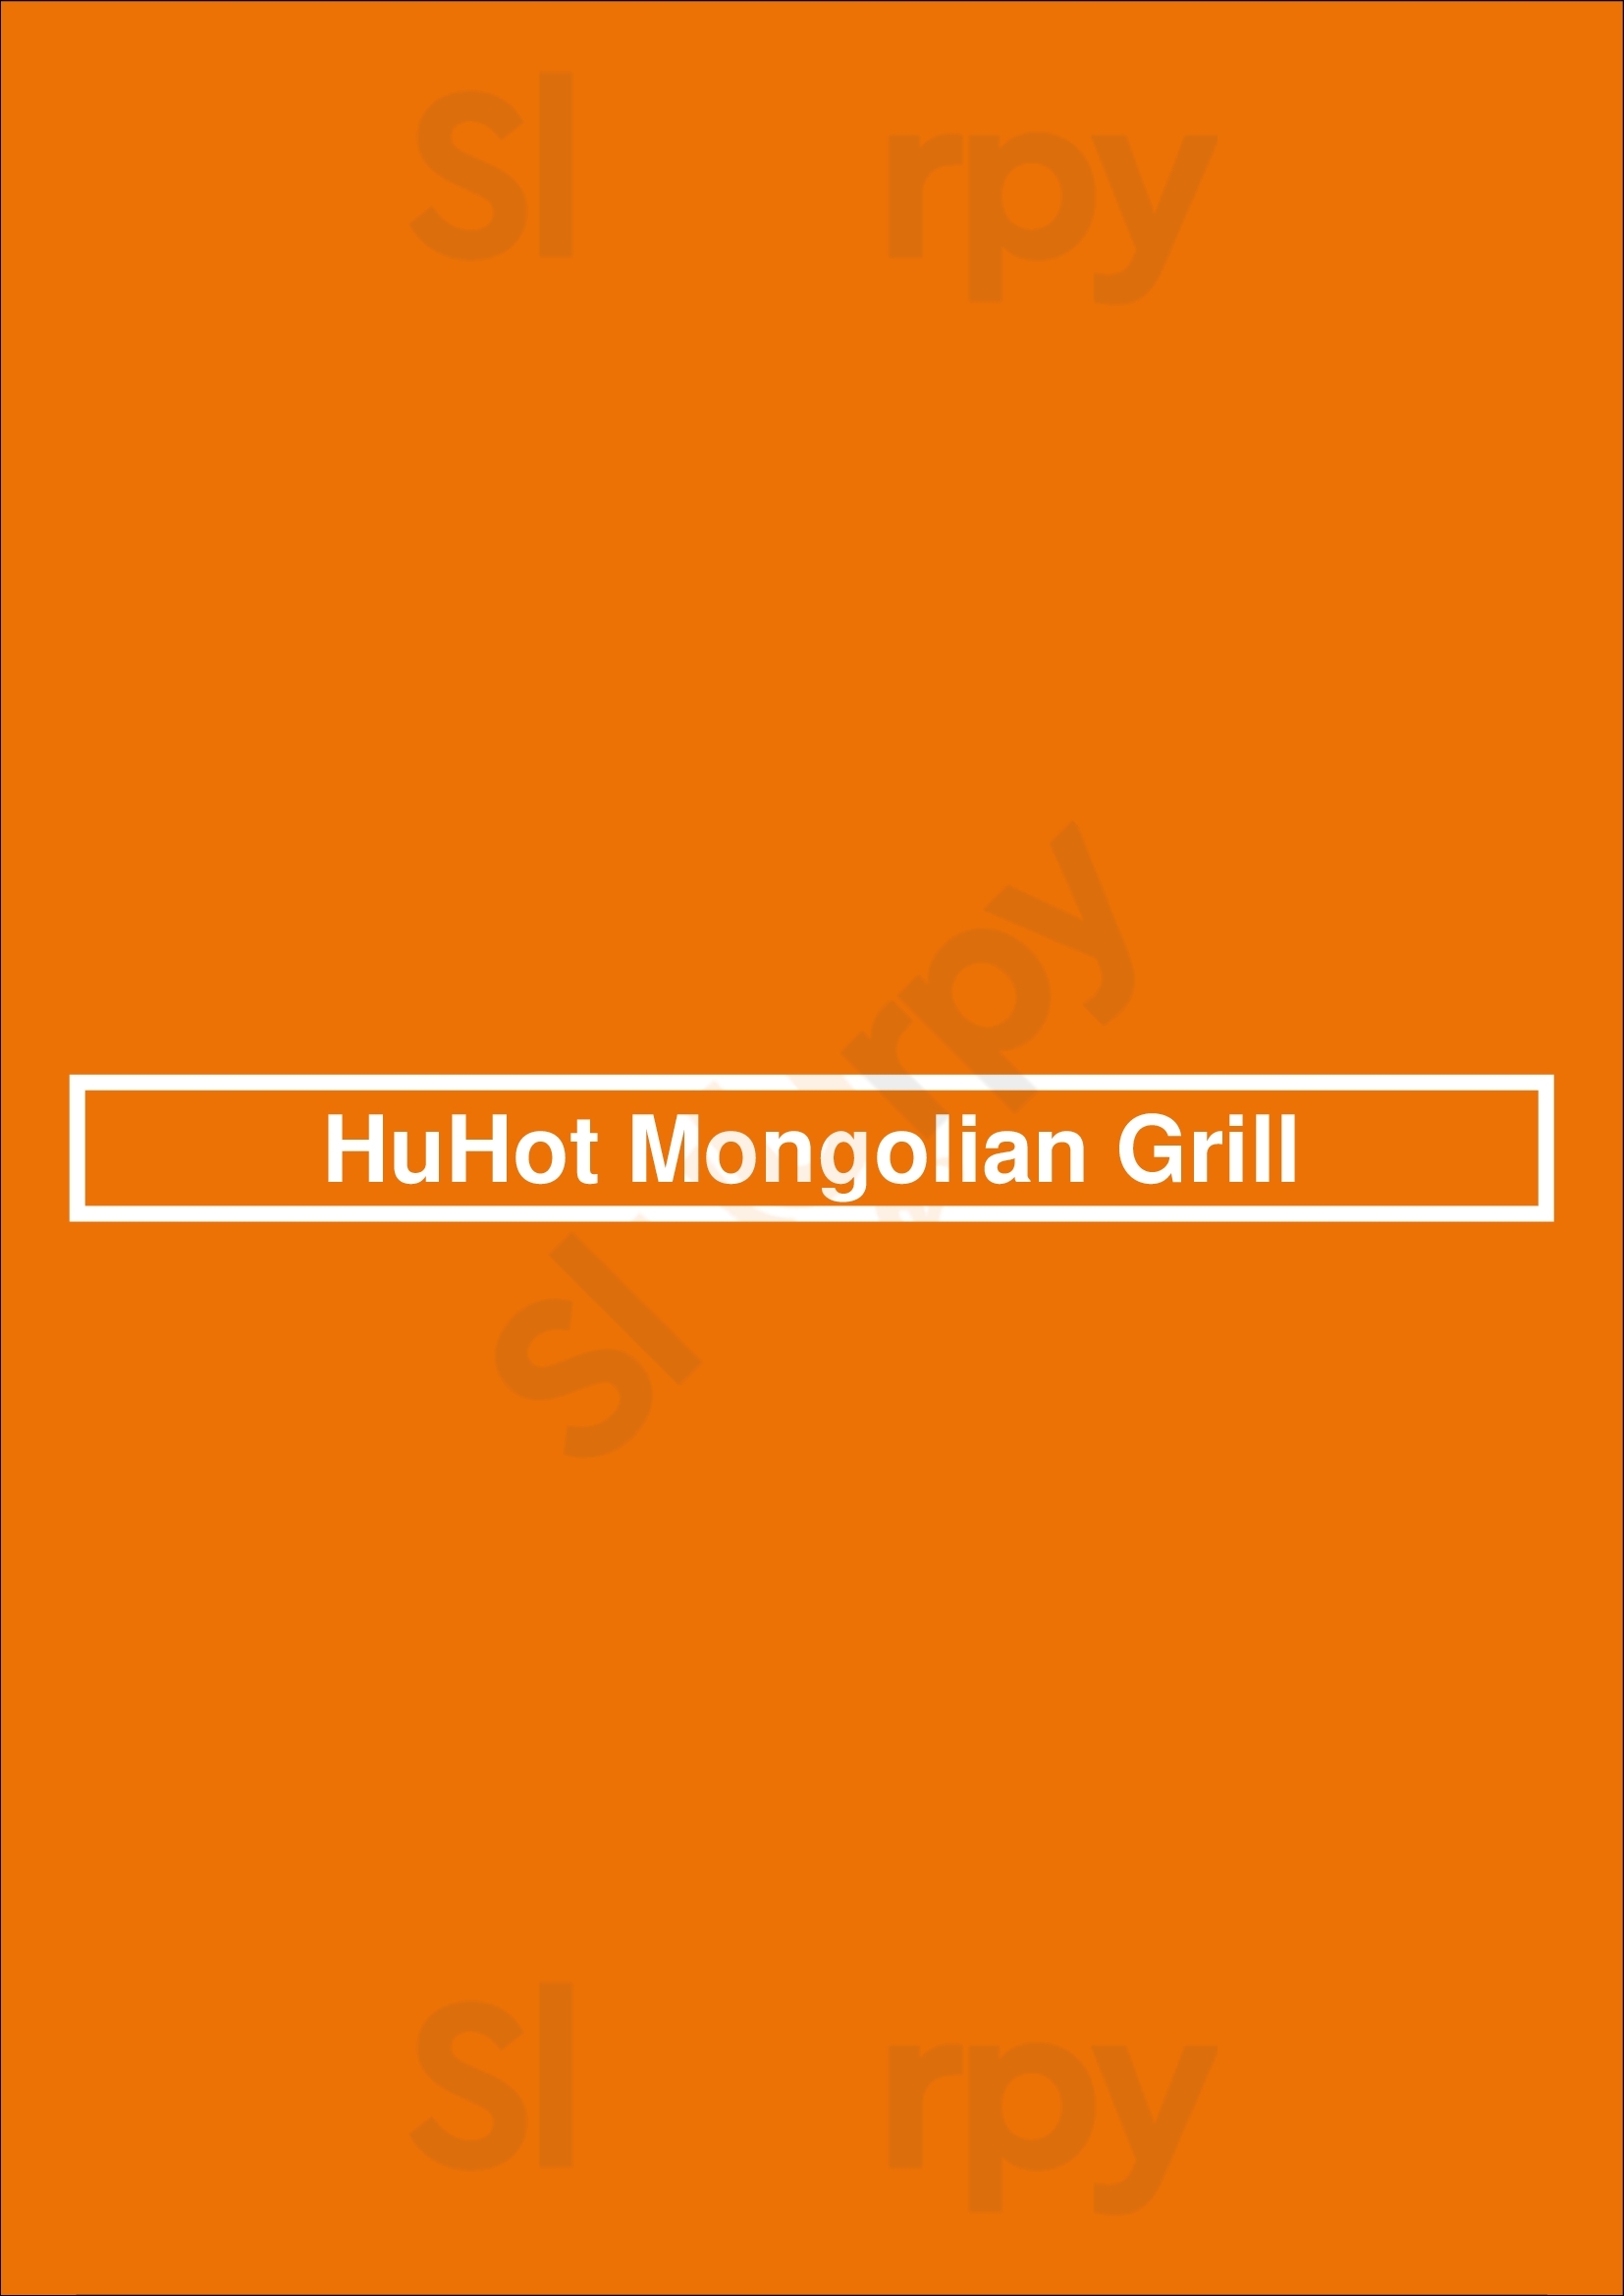 Huhot Mongolian Grill Denver Menu - 1